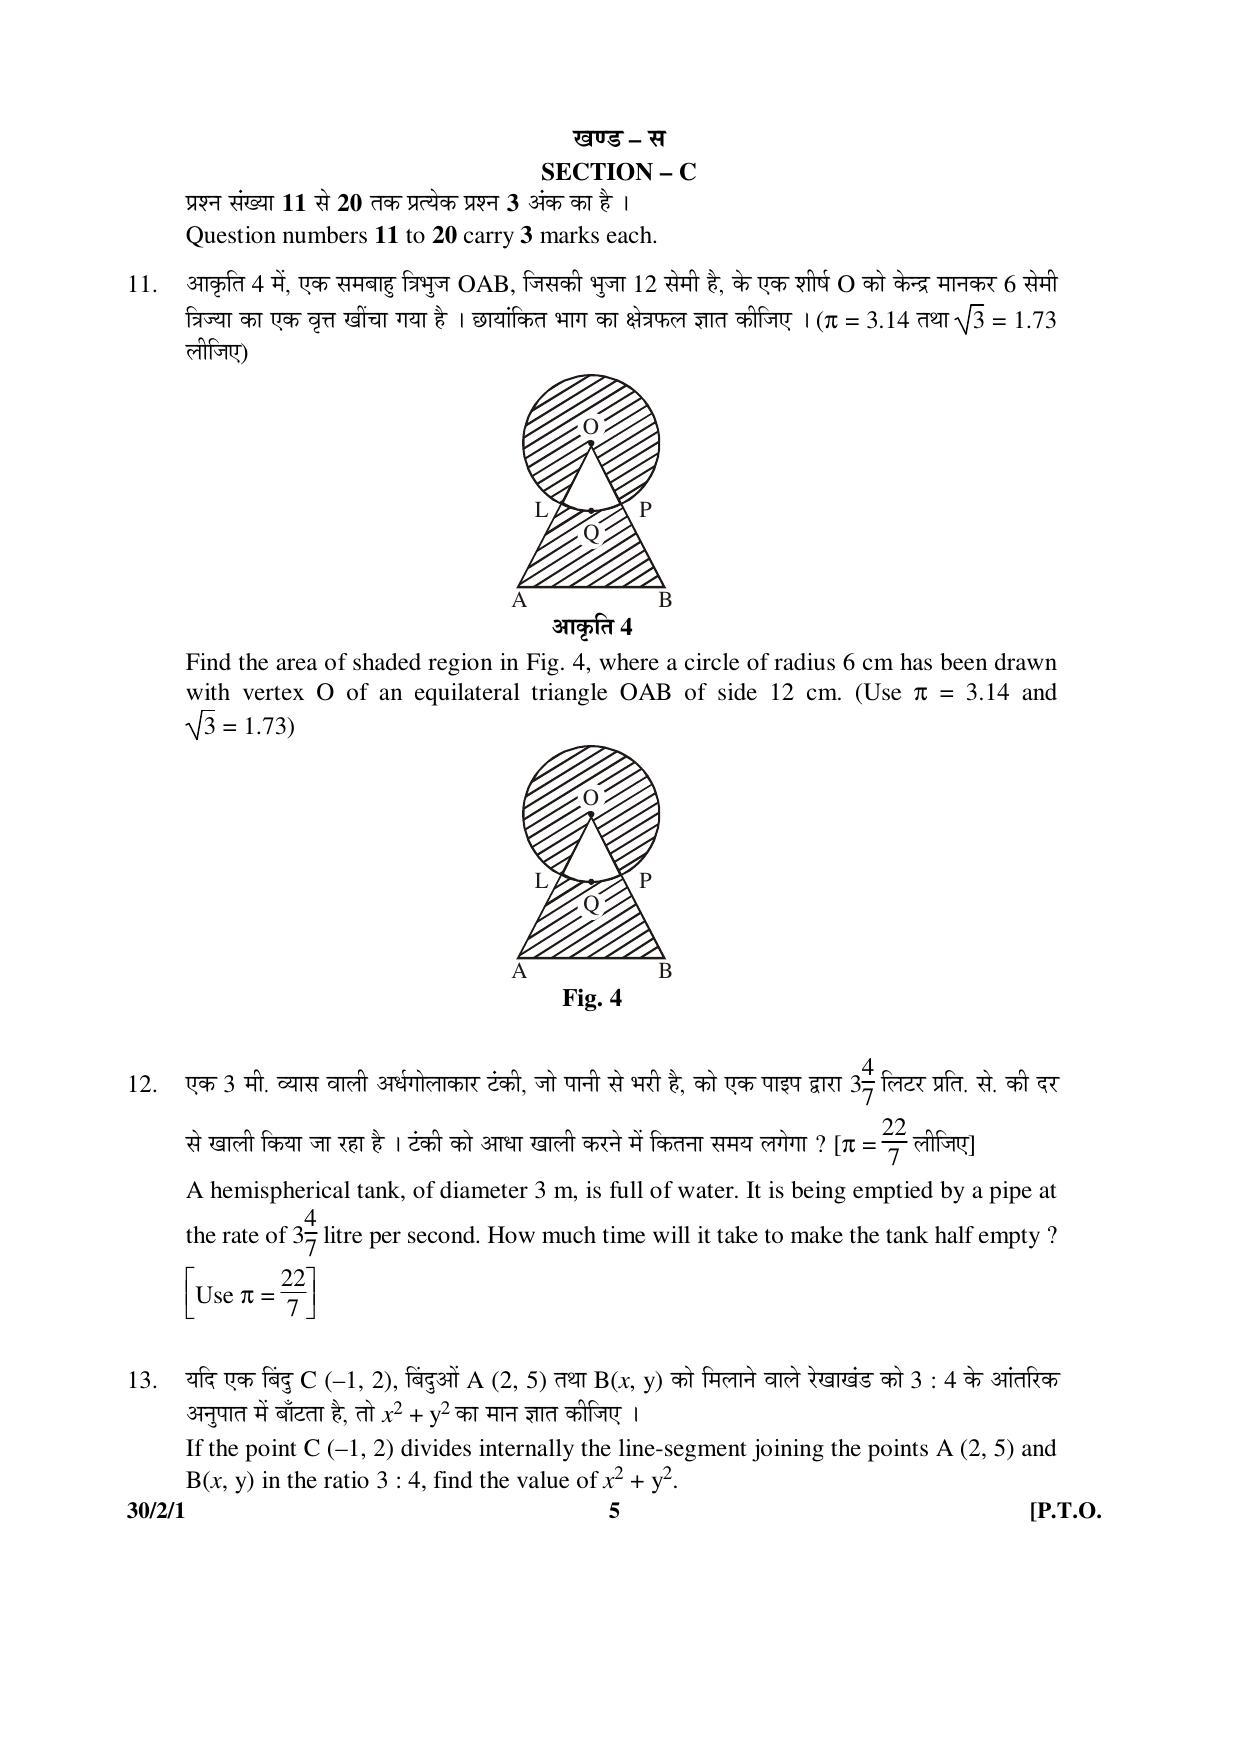 CBSE Class 10 30-2-1 _Mathematics 2016 Question Paper - Page 5